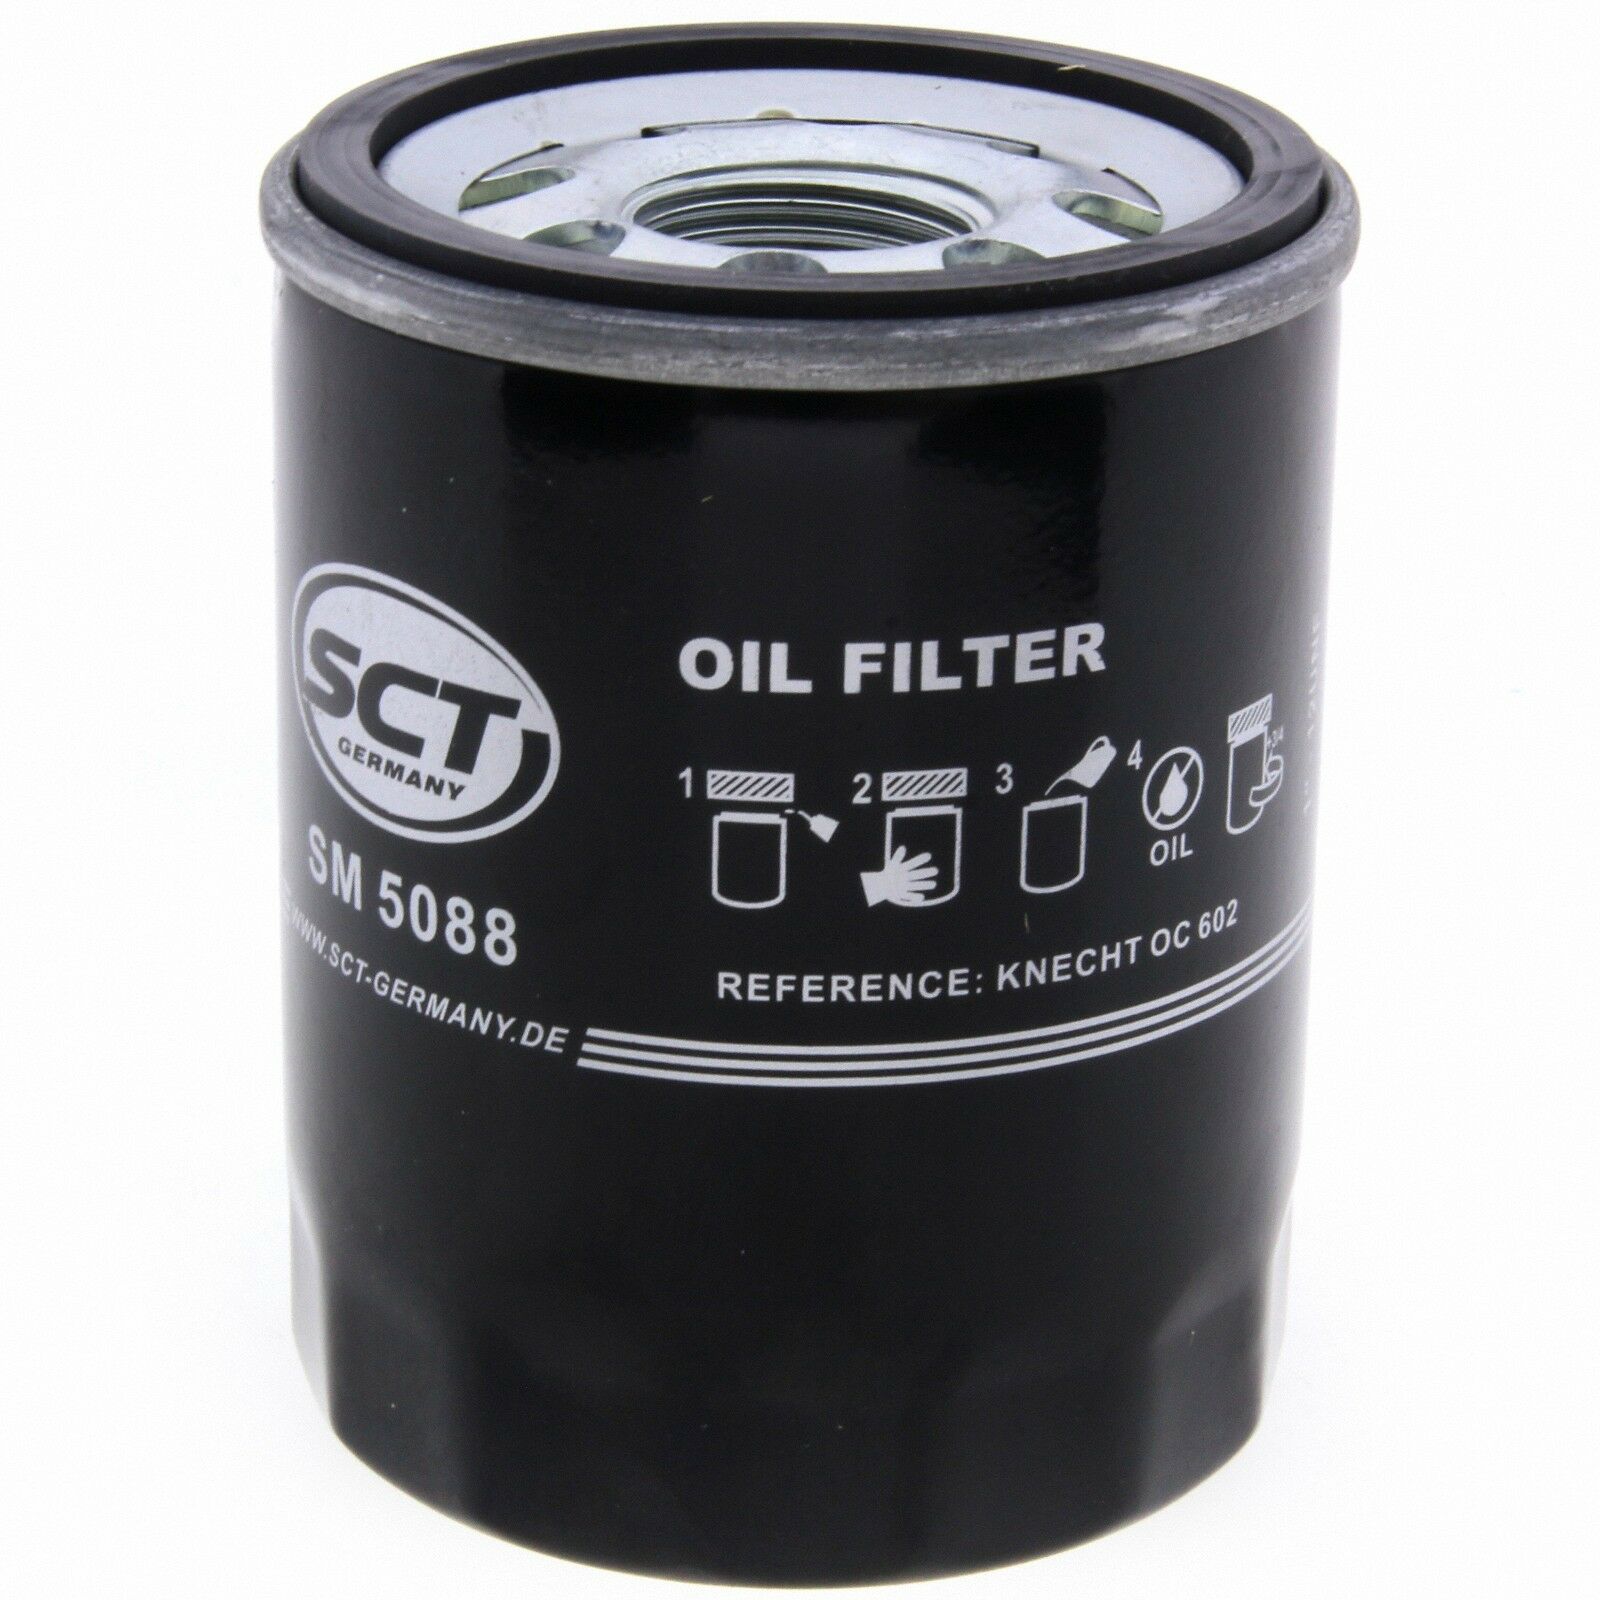 SCT Ölfilter SM5088 Filter Motorfilter Servicefilter Anschraubfilter Jaguar Land Rover